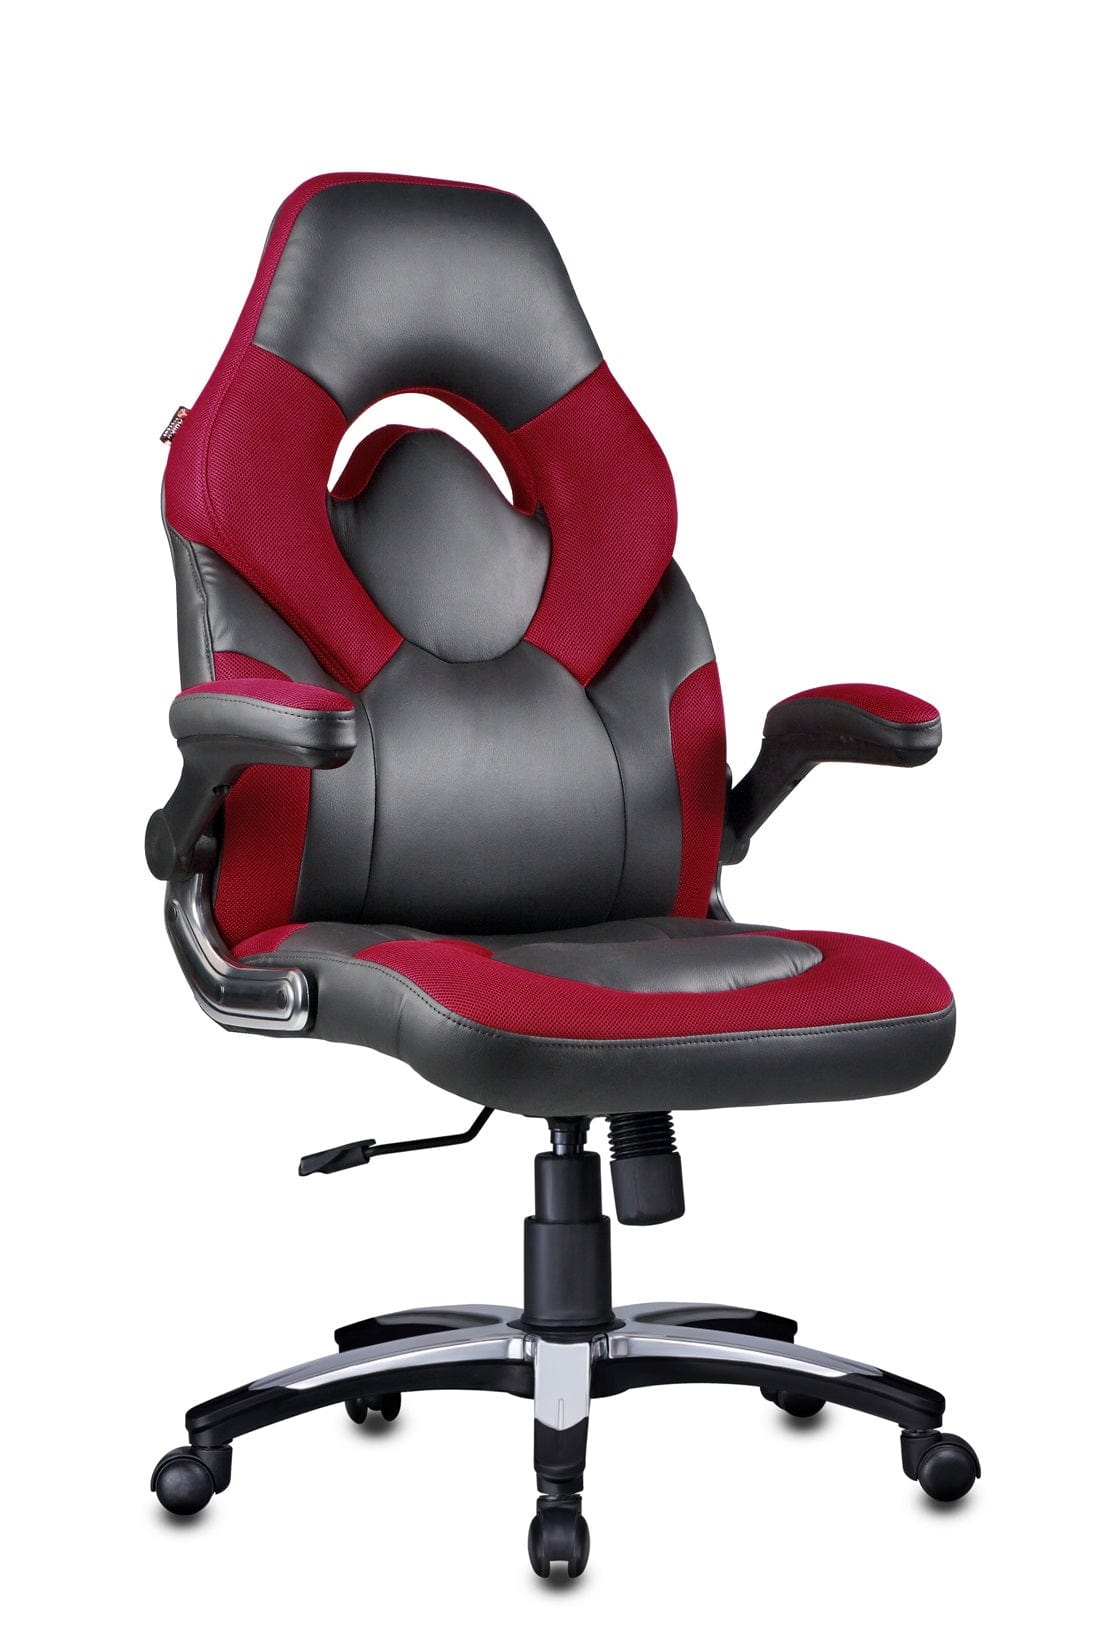 Stylish Designer chair in Black / Red